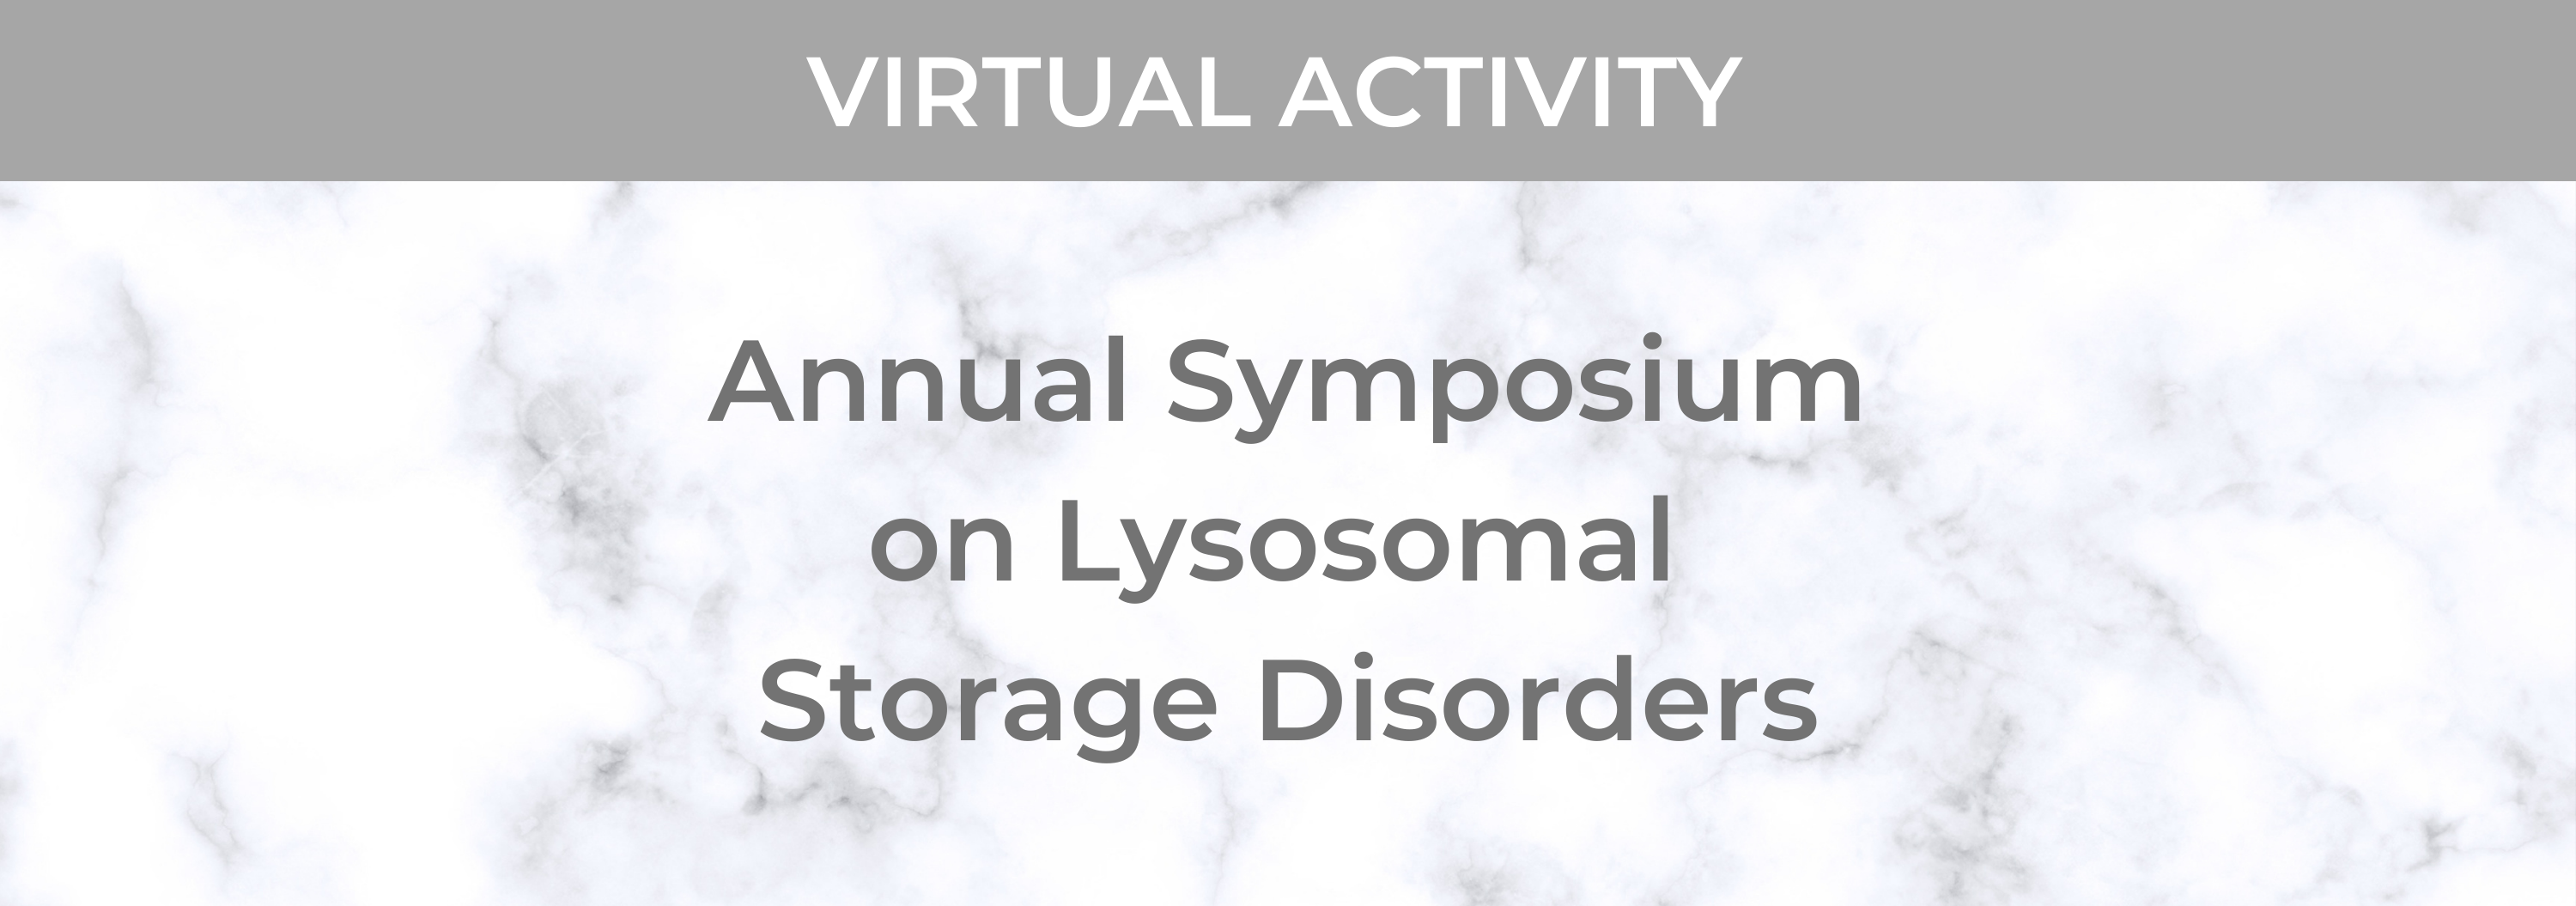 10th Annual Symposium on Lysosomal Storage Disorders Banner